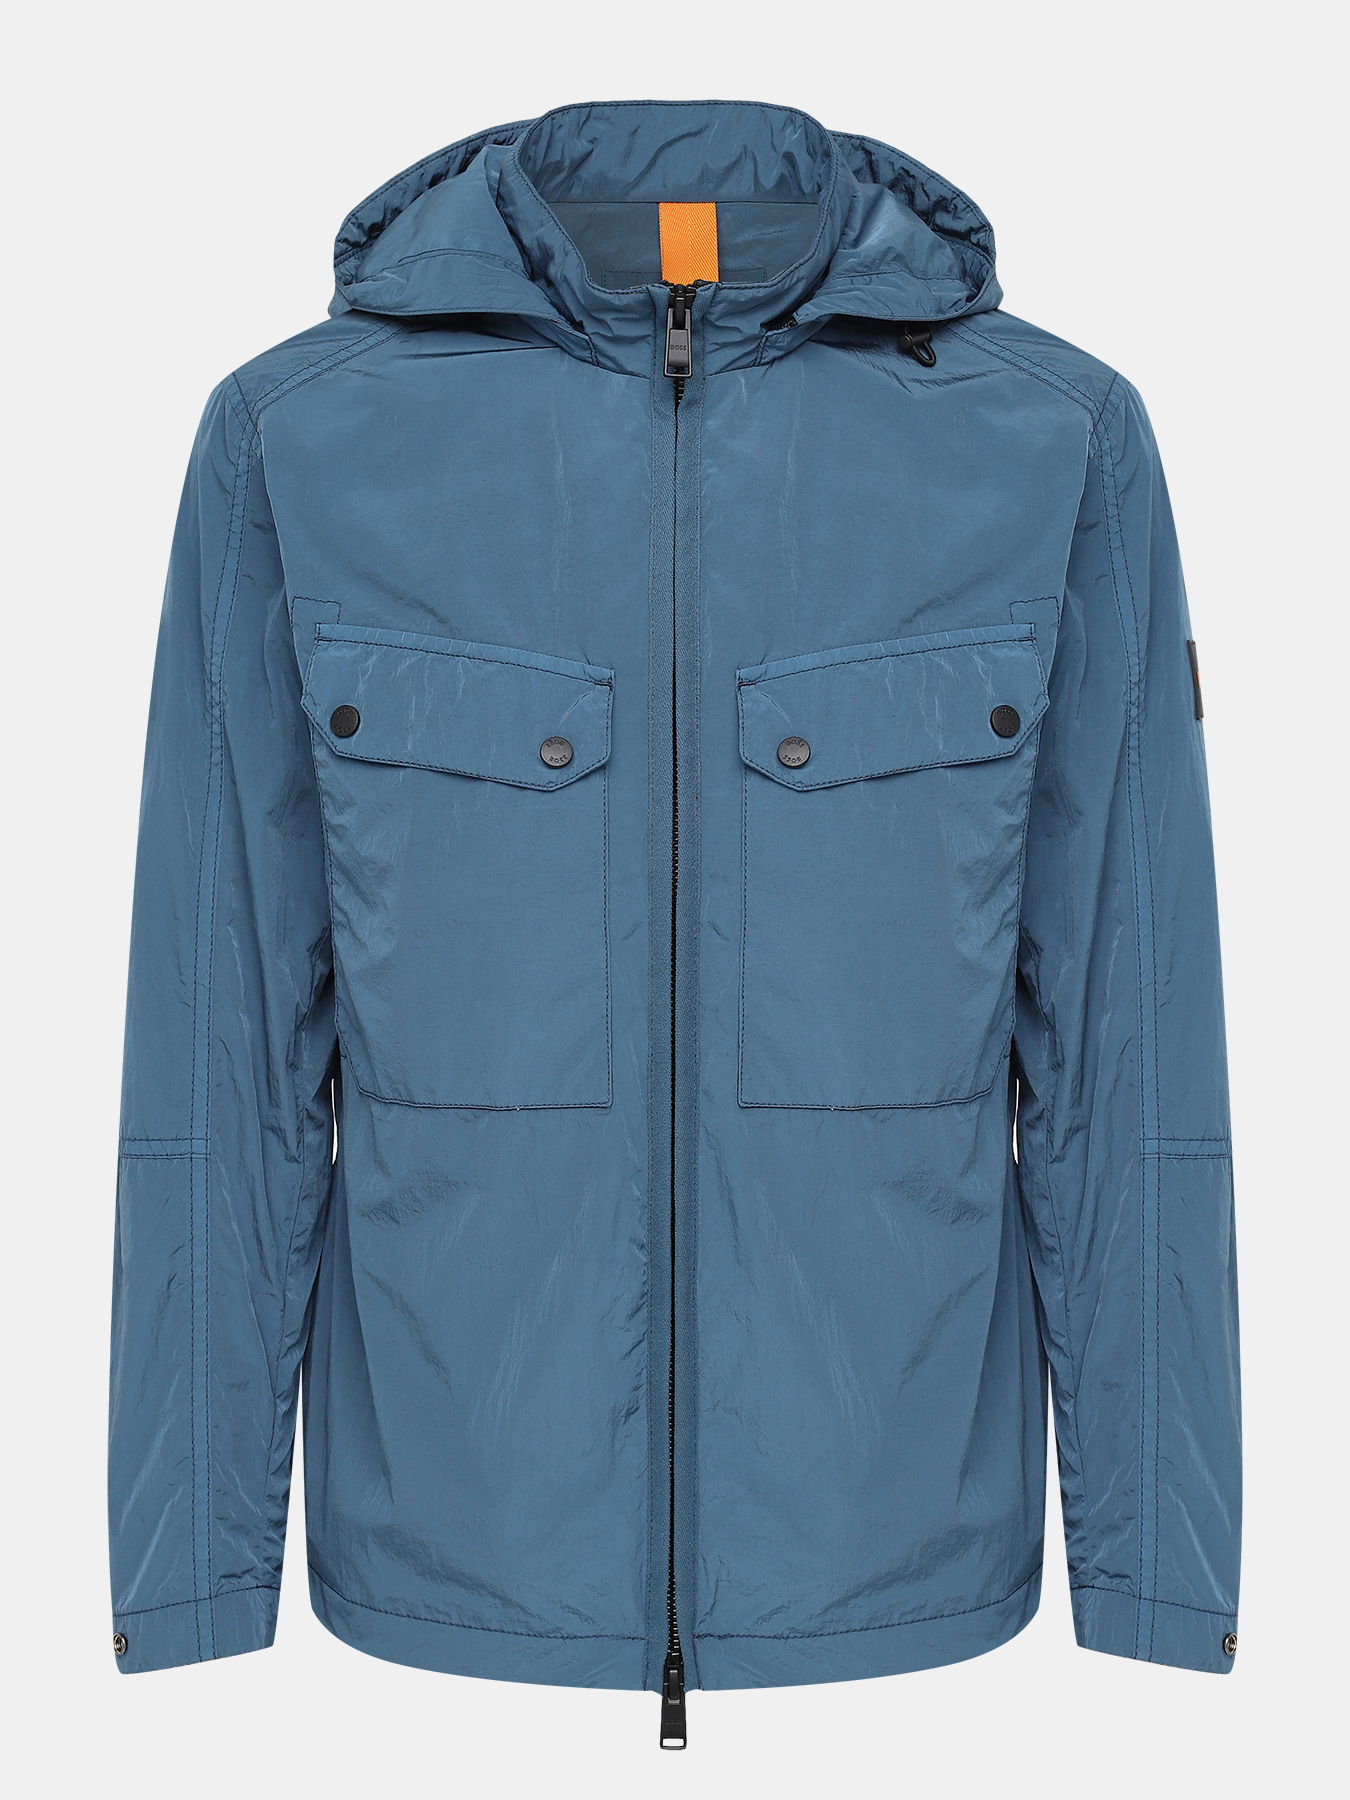 Куртка Odell D BOSS 421179-027, цвет синий, размер 52 - фото 1